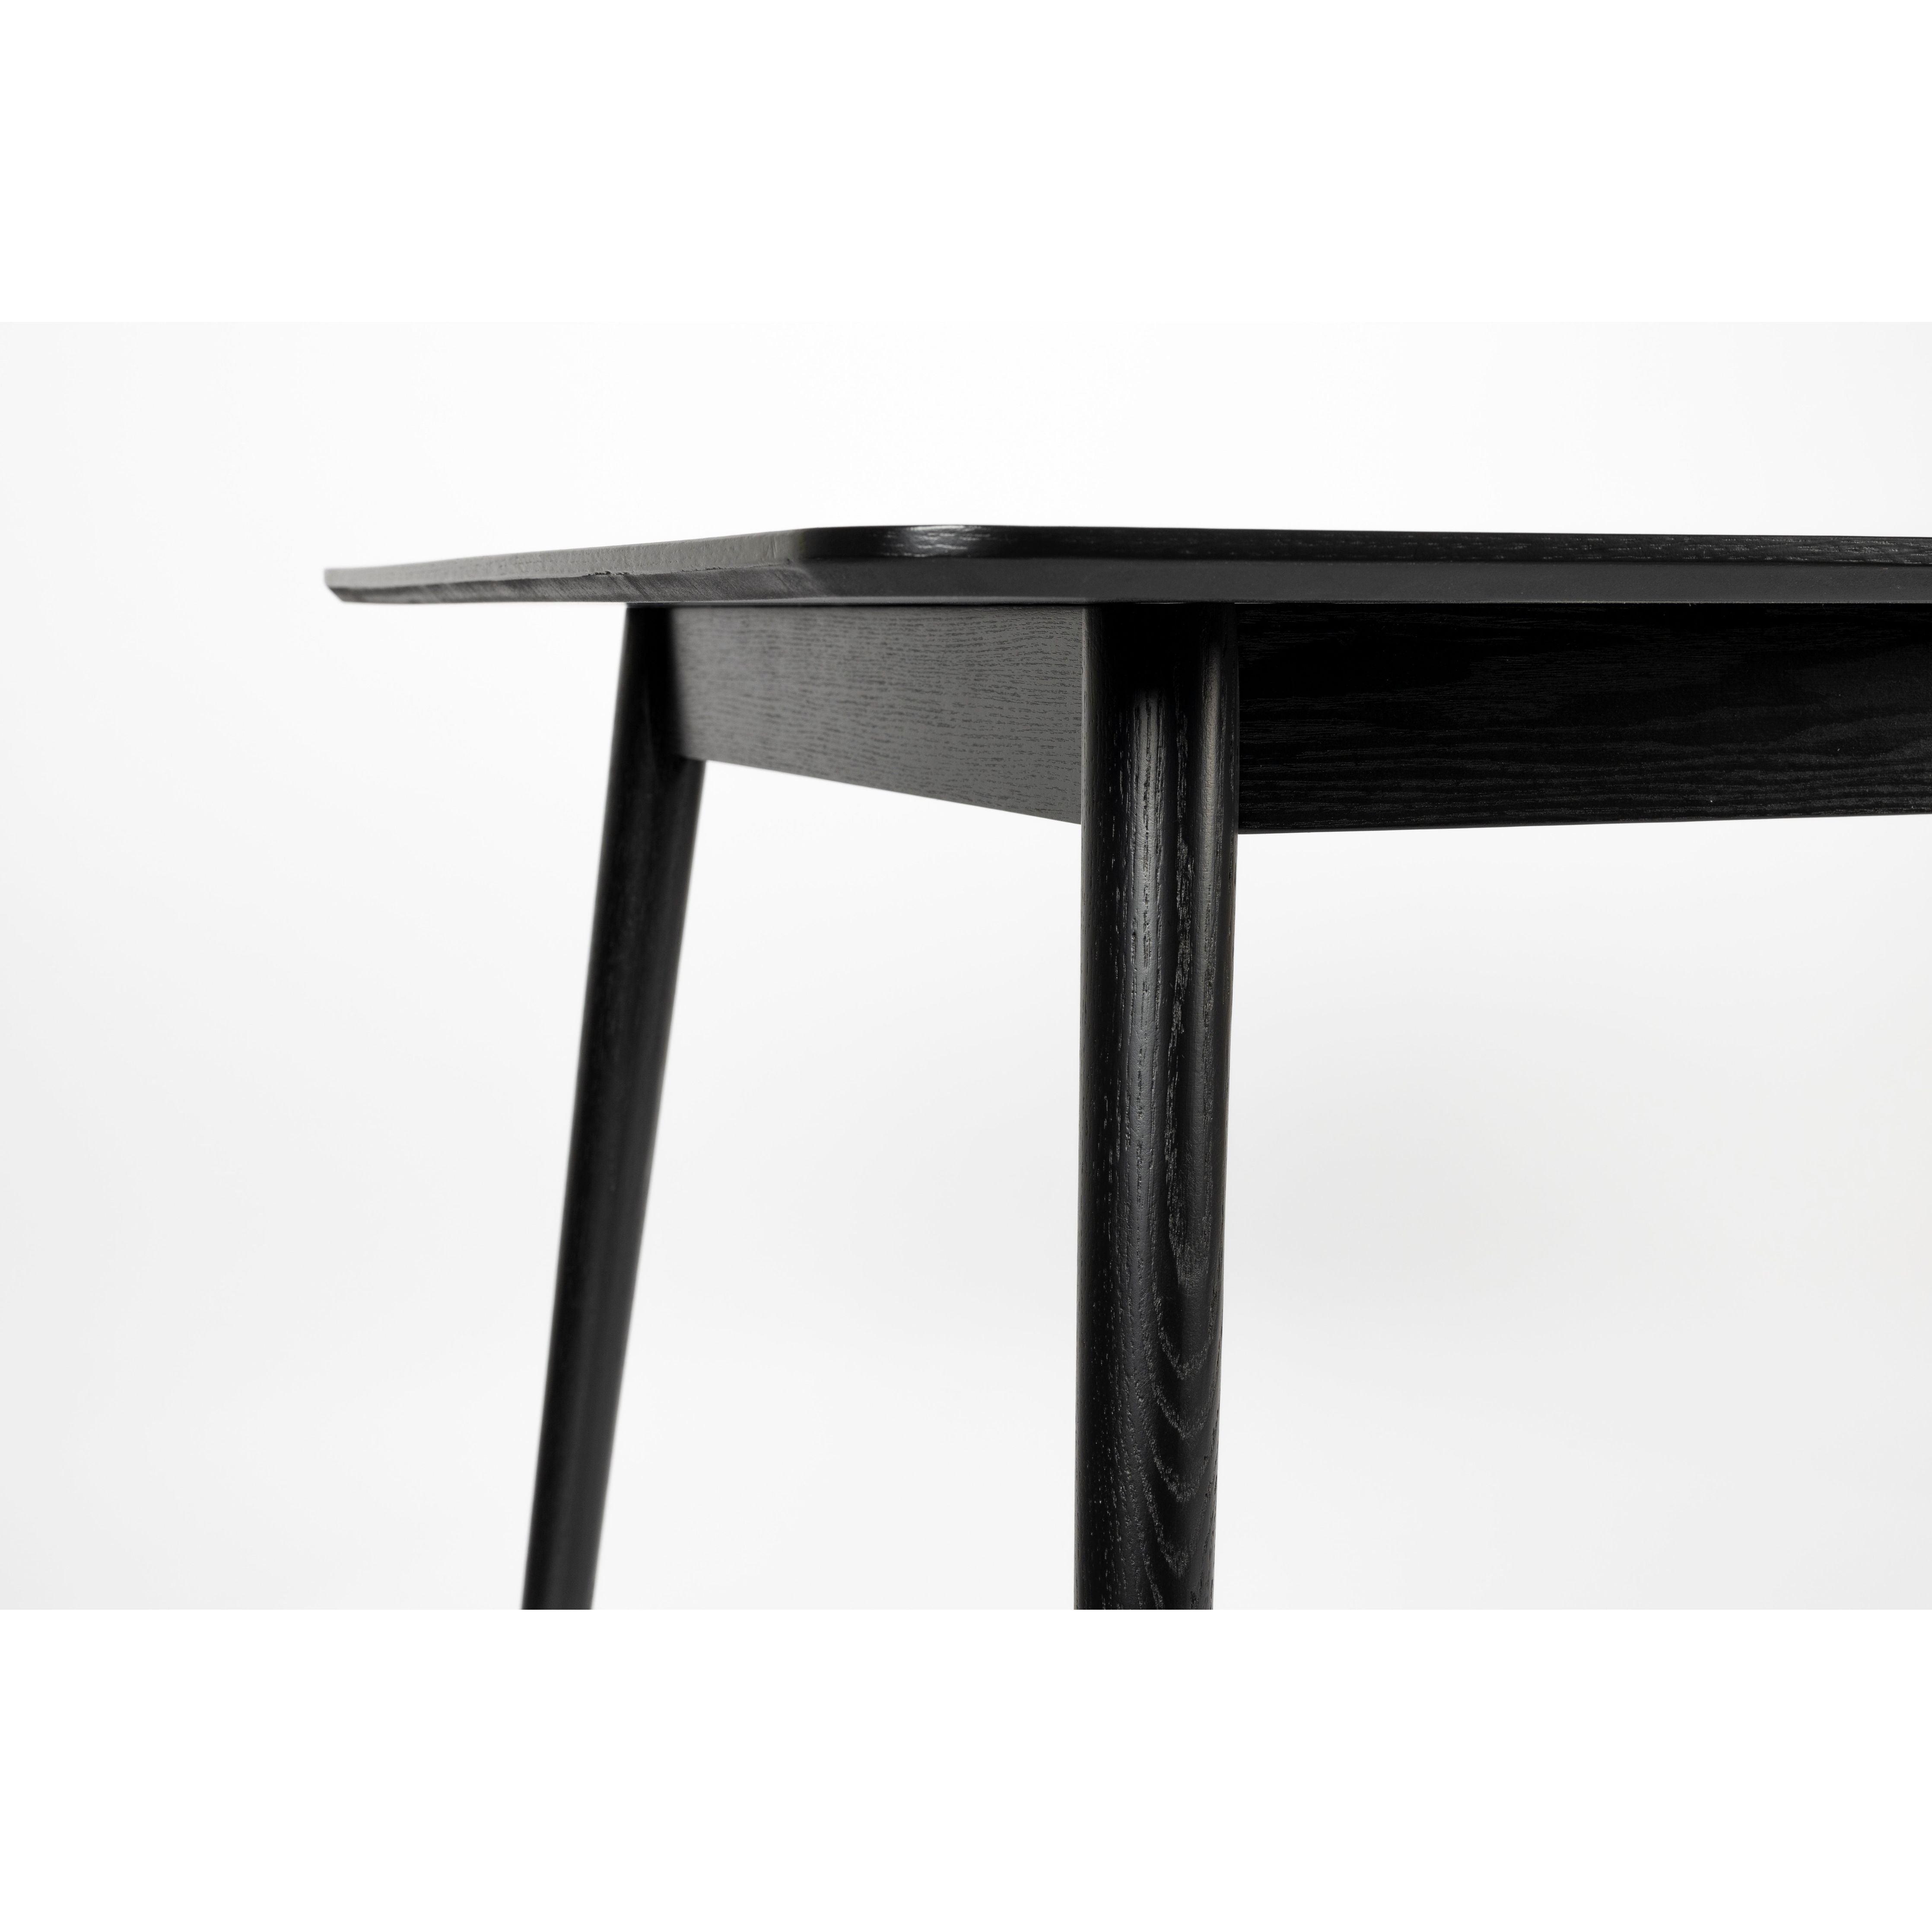 Table fabio 180x90 black